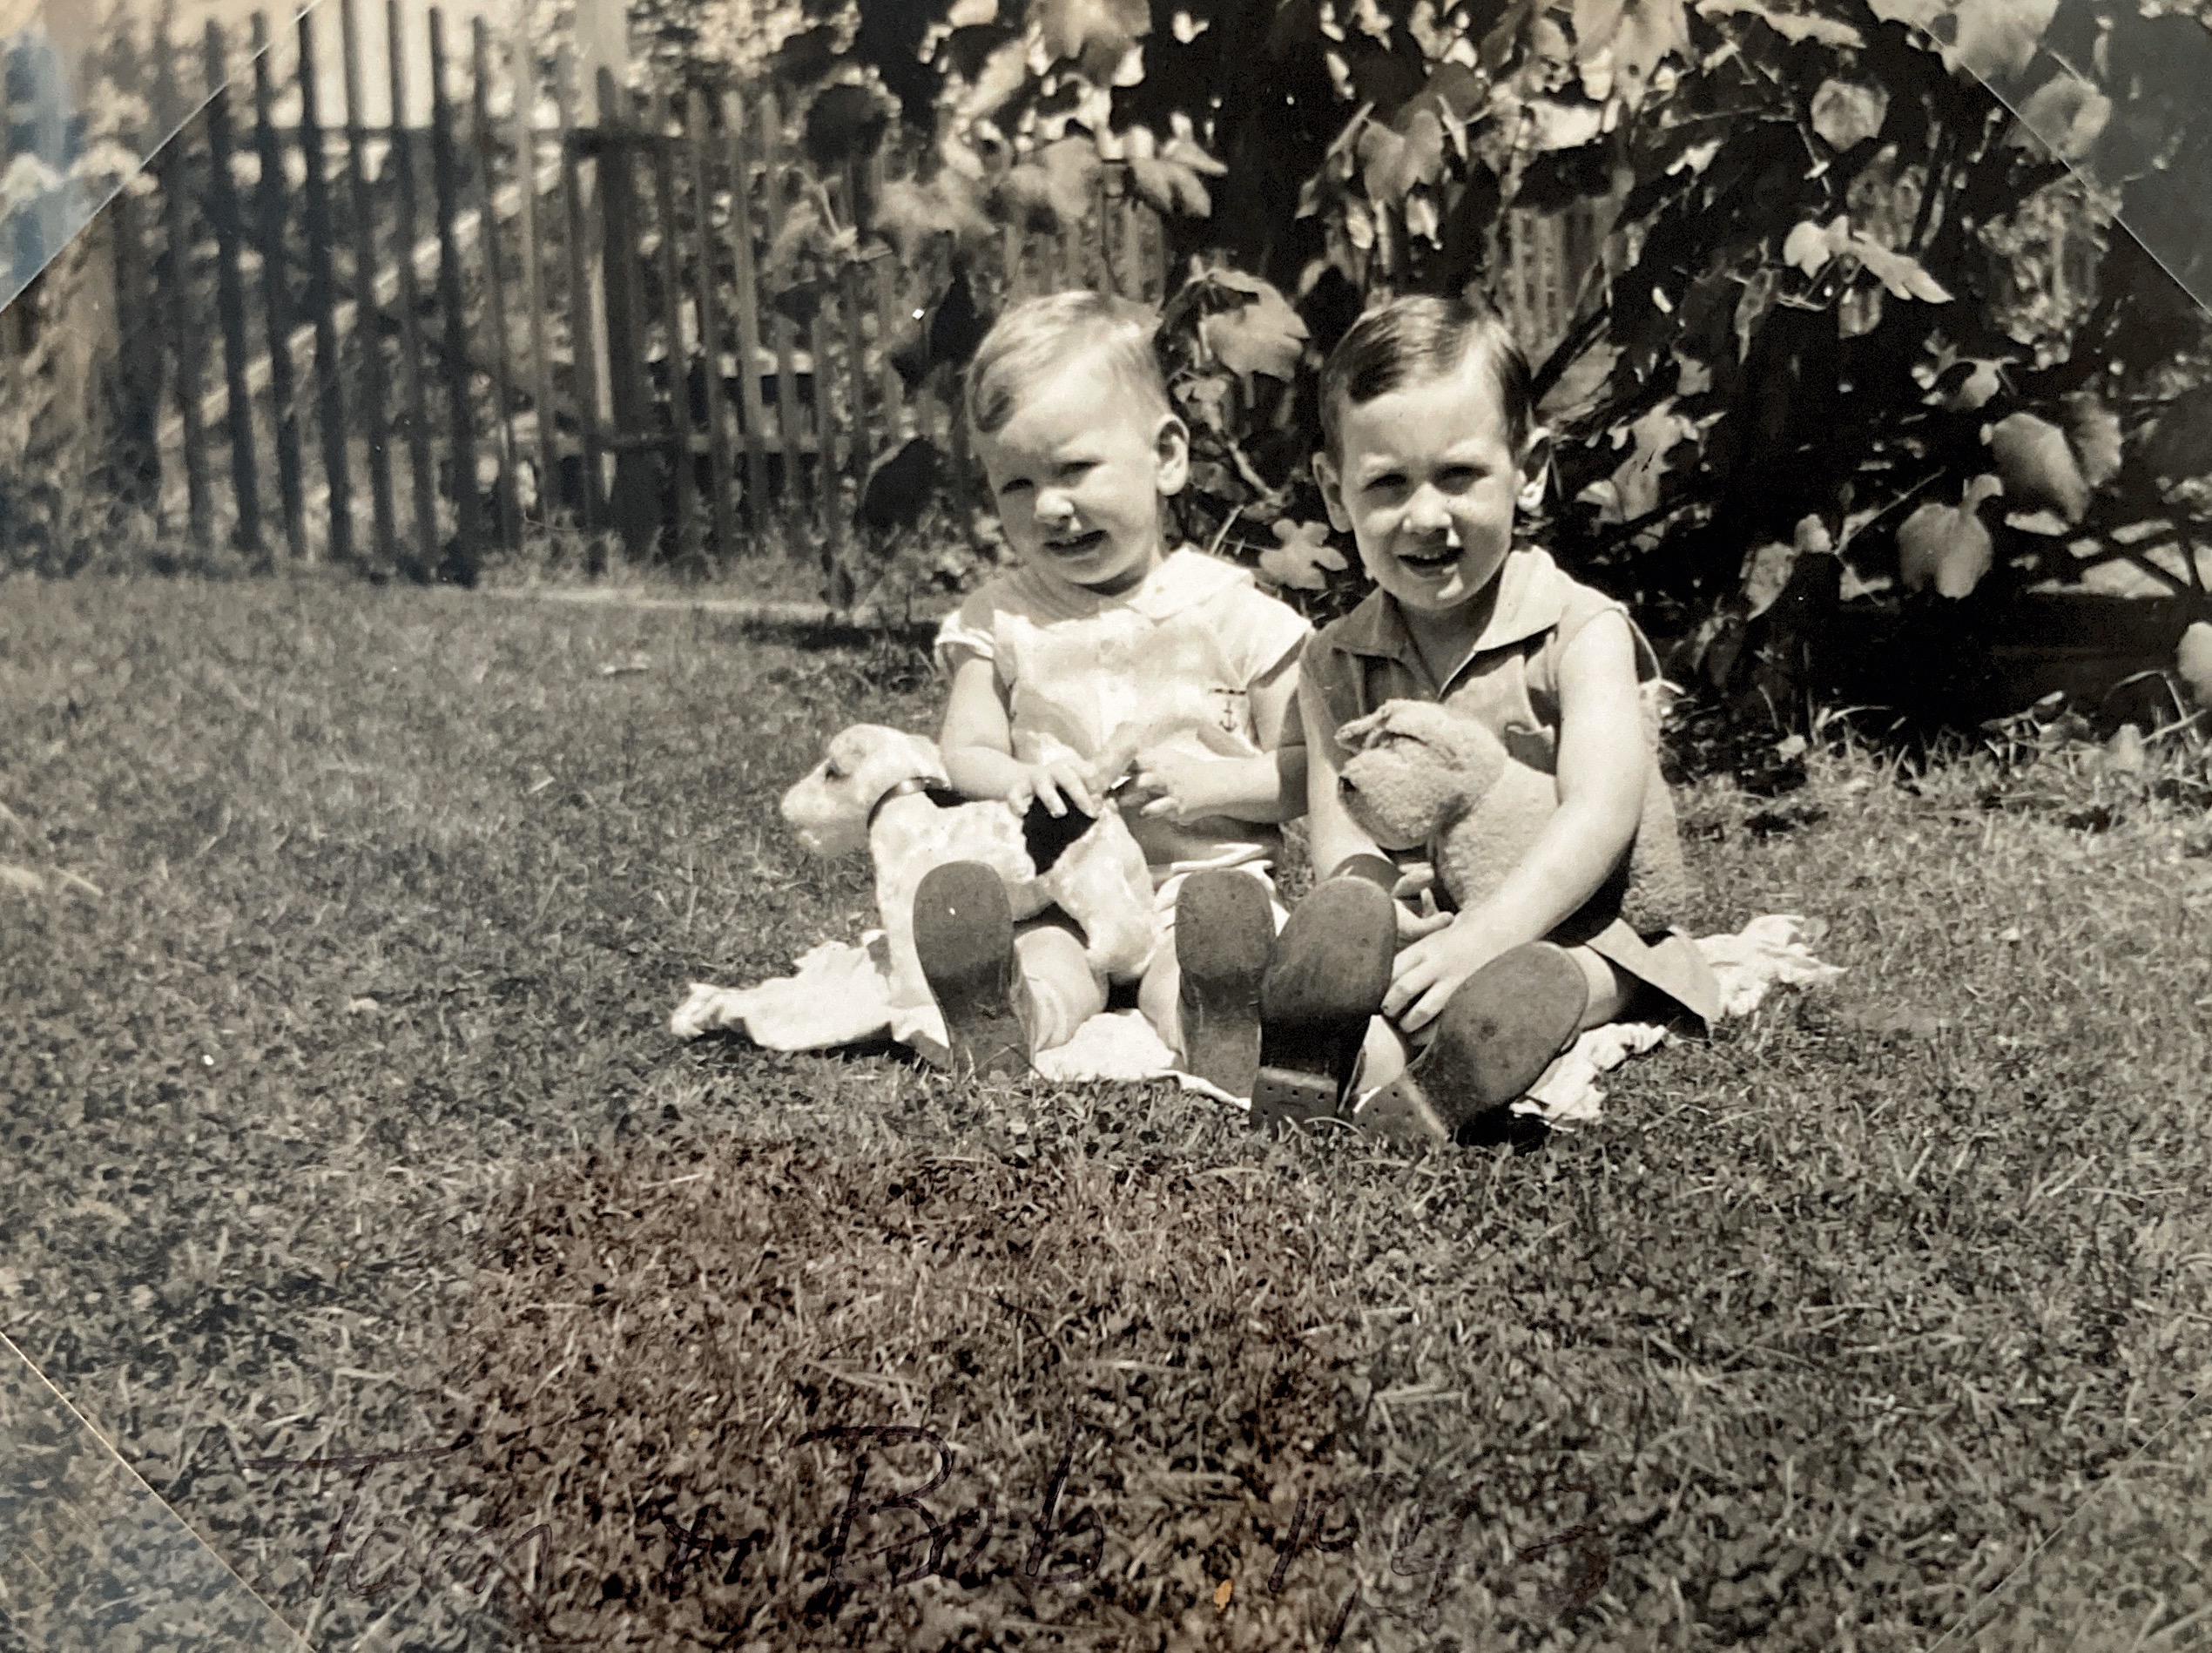 John’s brothers, Tim & Bob in 1939